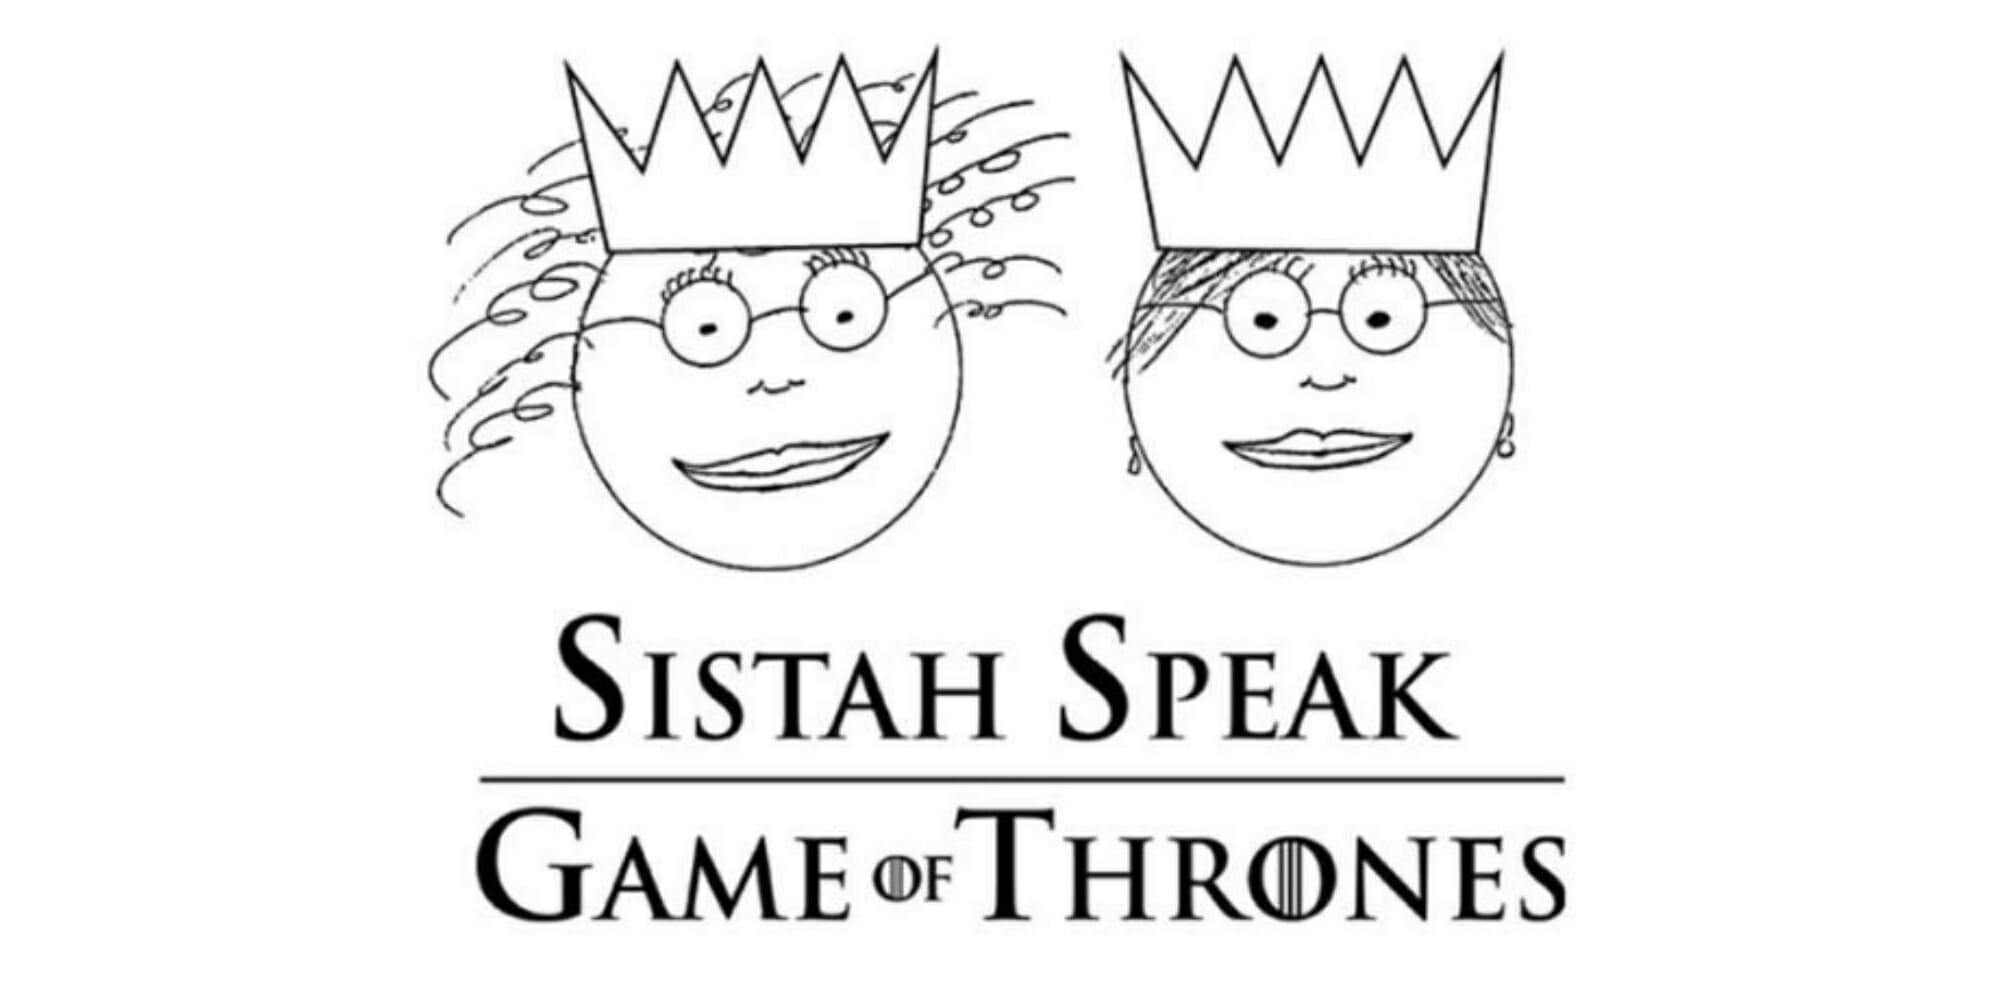 best game of thrones podcasts - sistah speak